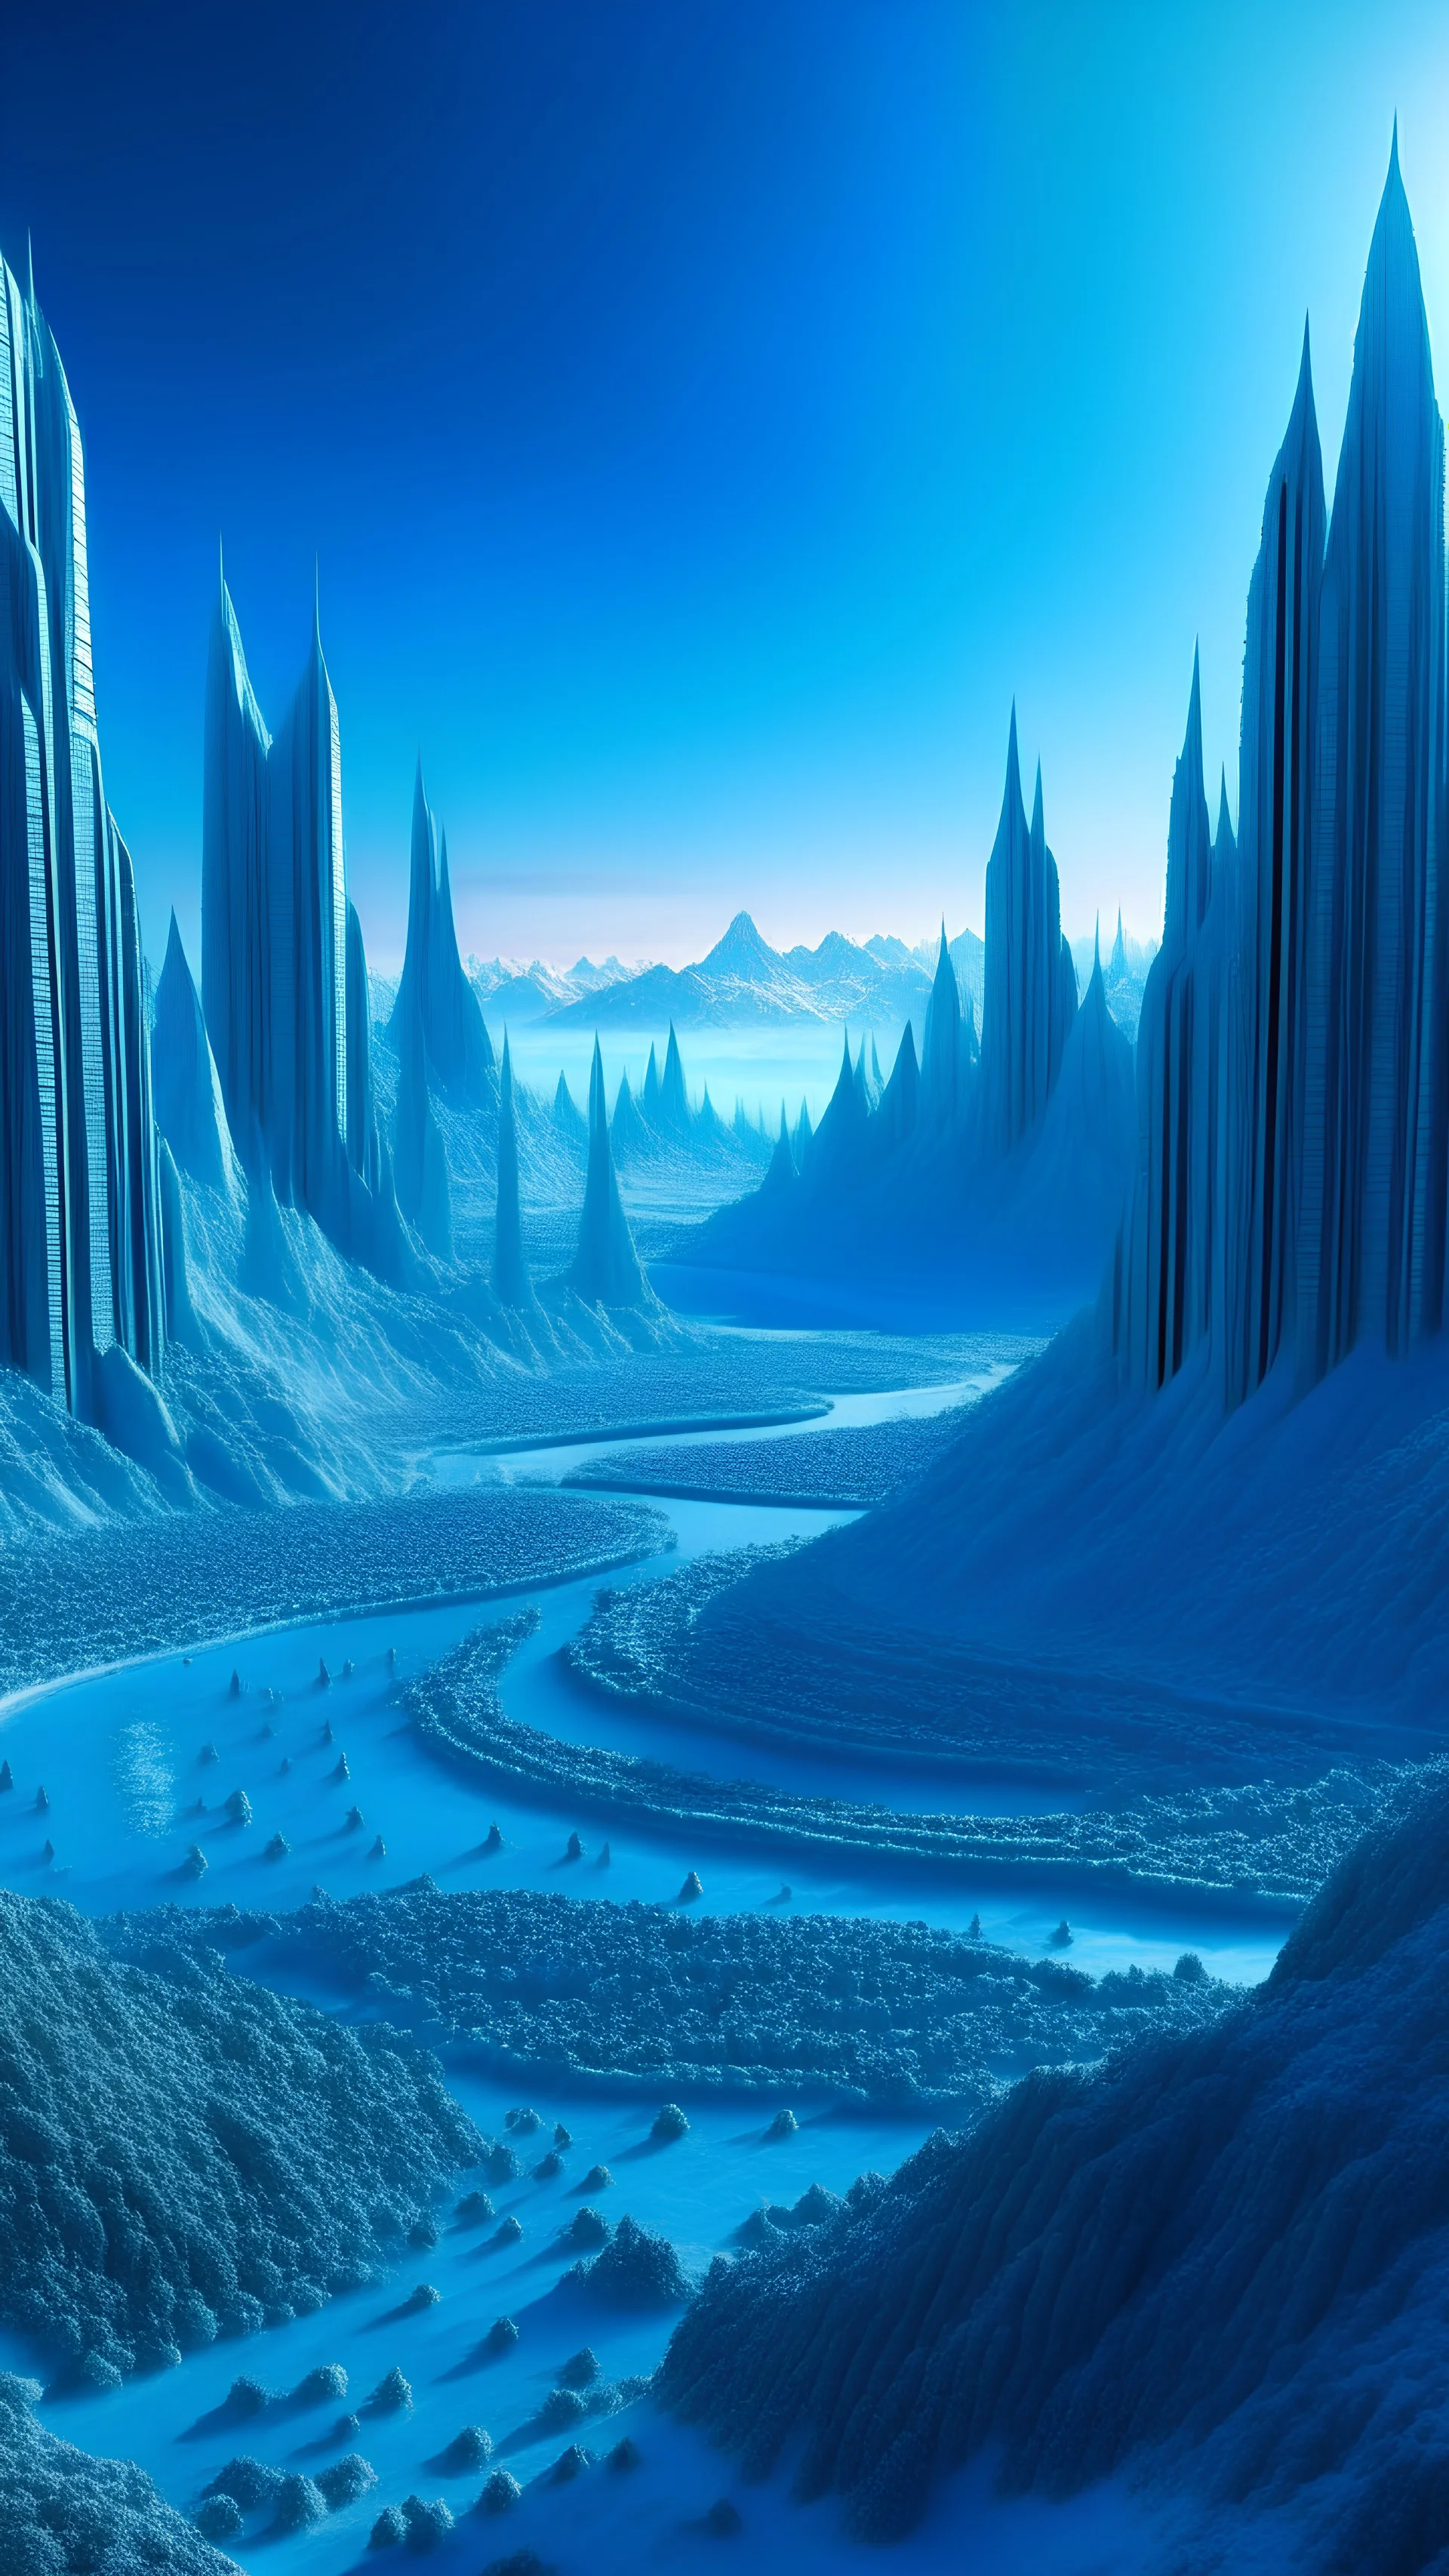 star trek inspired alien city, 4k photo, glacier, hyperrealistic